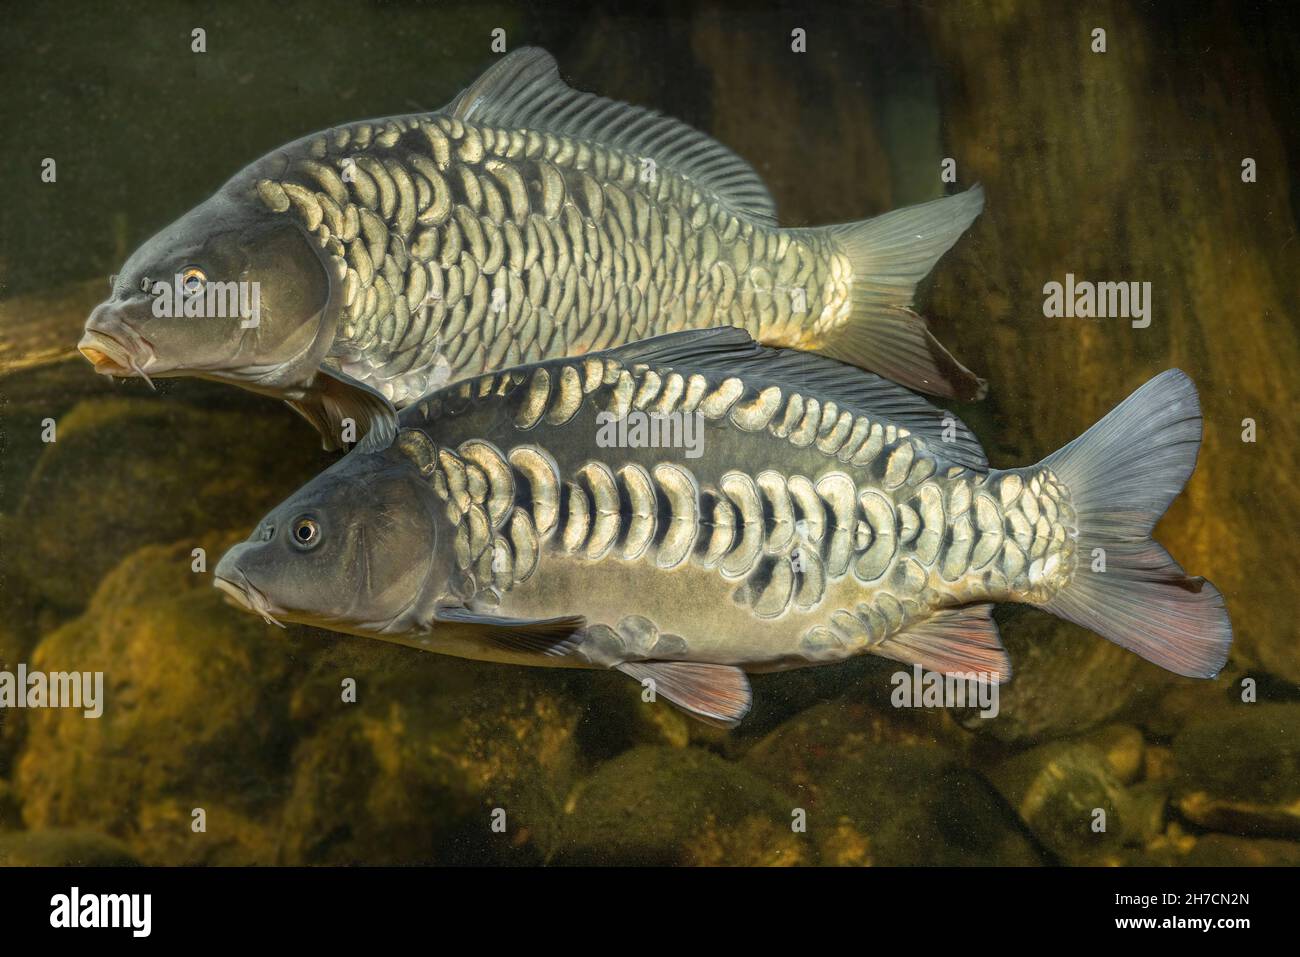 carp, common carp, European carp (Cyprinus carpio), two fully scaled carps with unusal large scales, scale abnormality, Germany Stock Photo